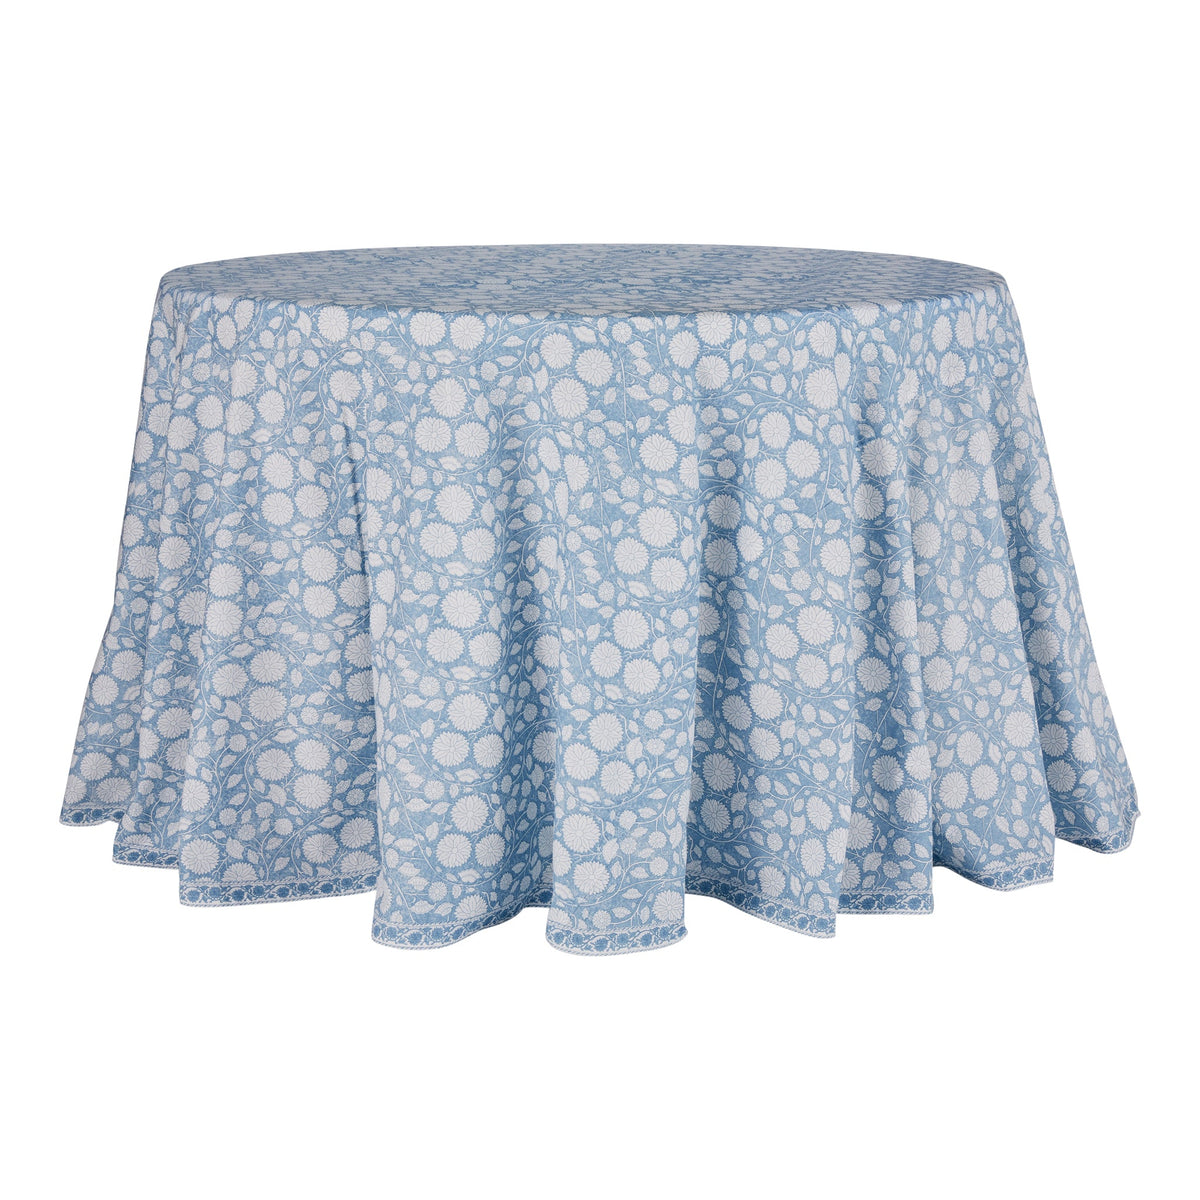 Calypso Tablecloth in Blue